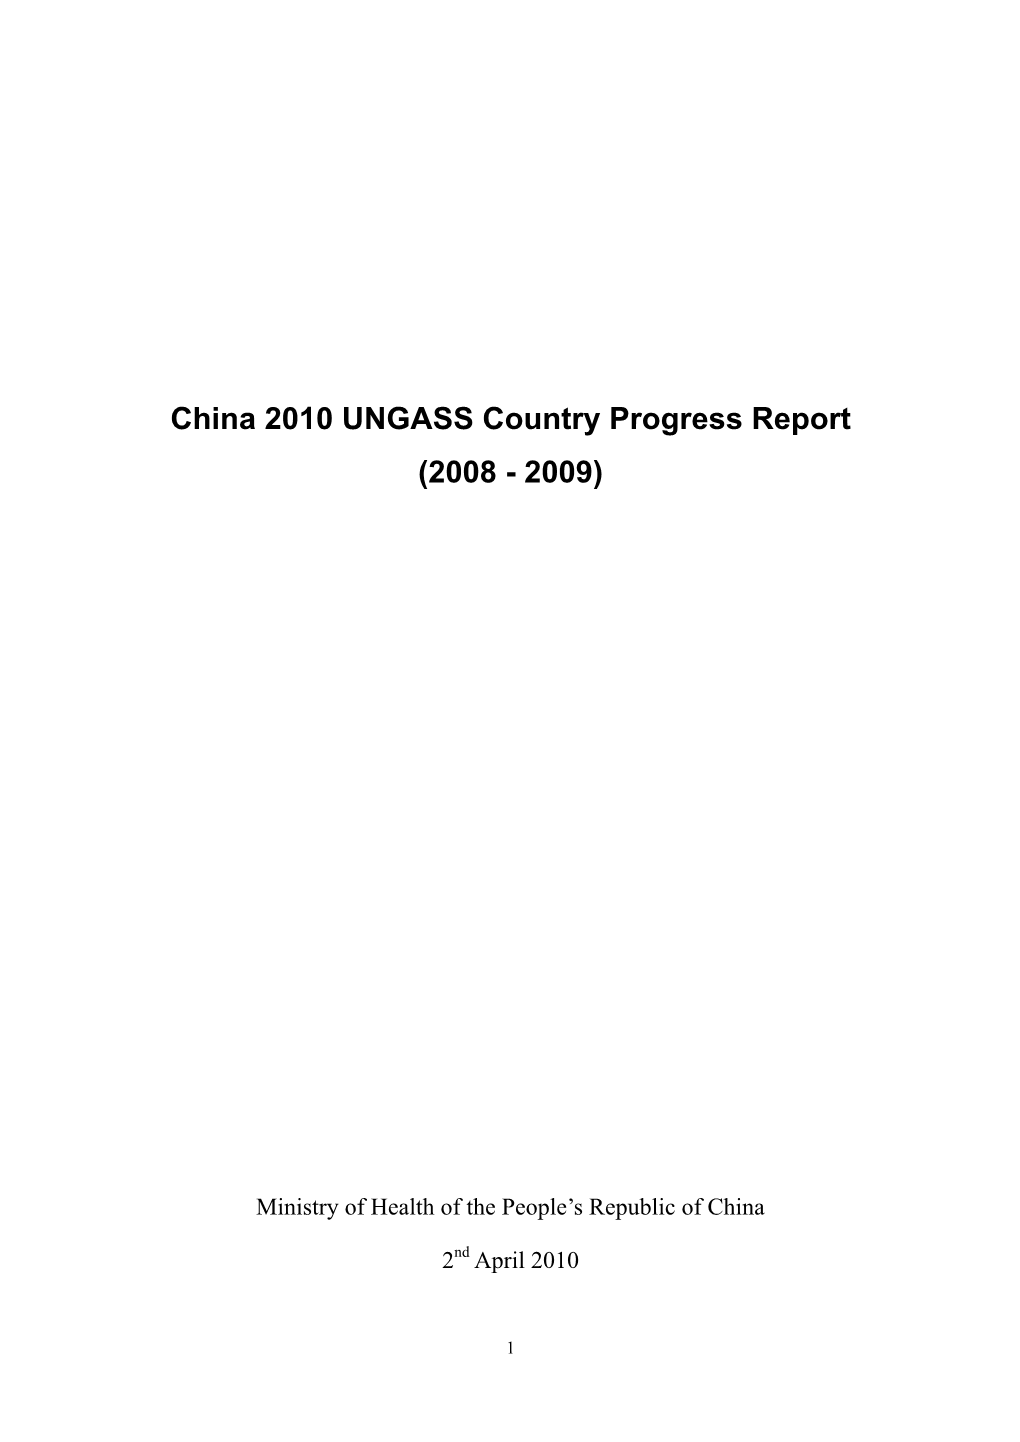 China 2010 UNGASS Country Progress Report (2008 - 2009)